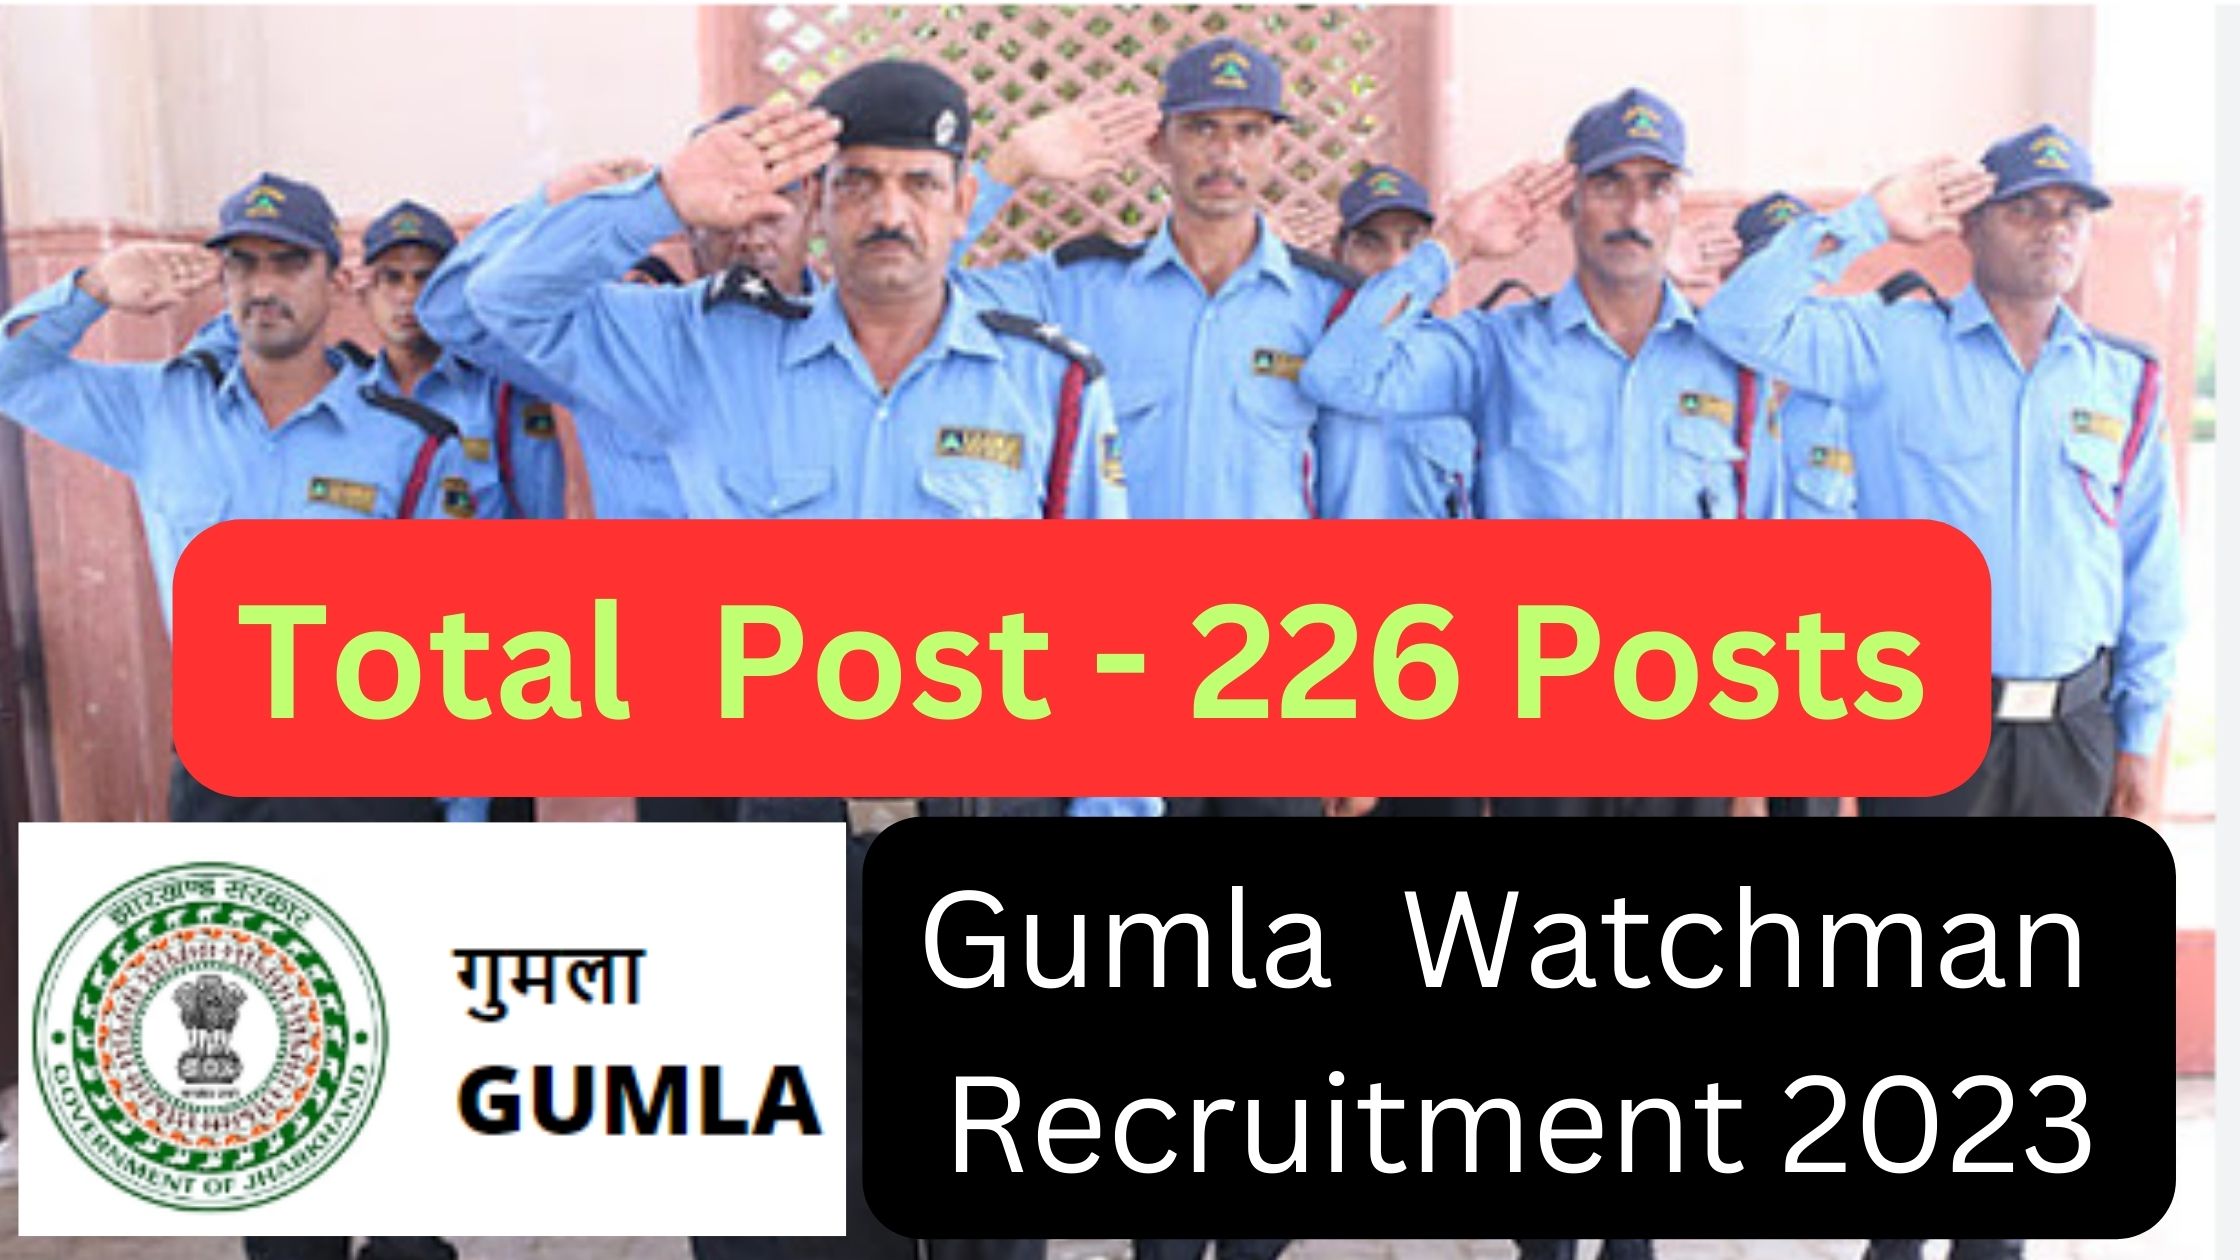 Gumla Watchman Recruitment 2023